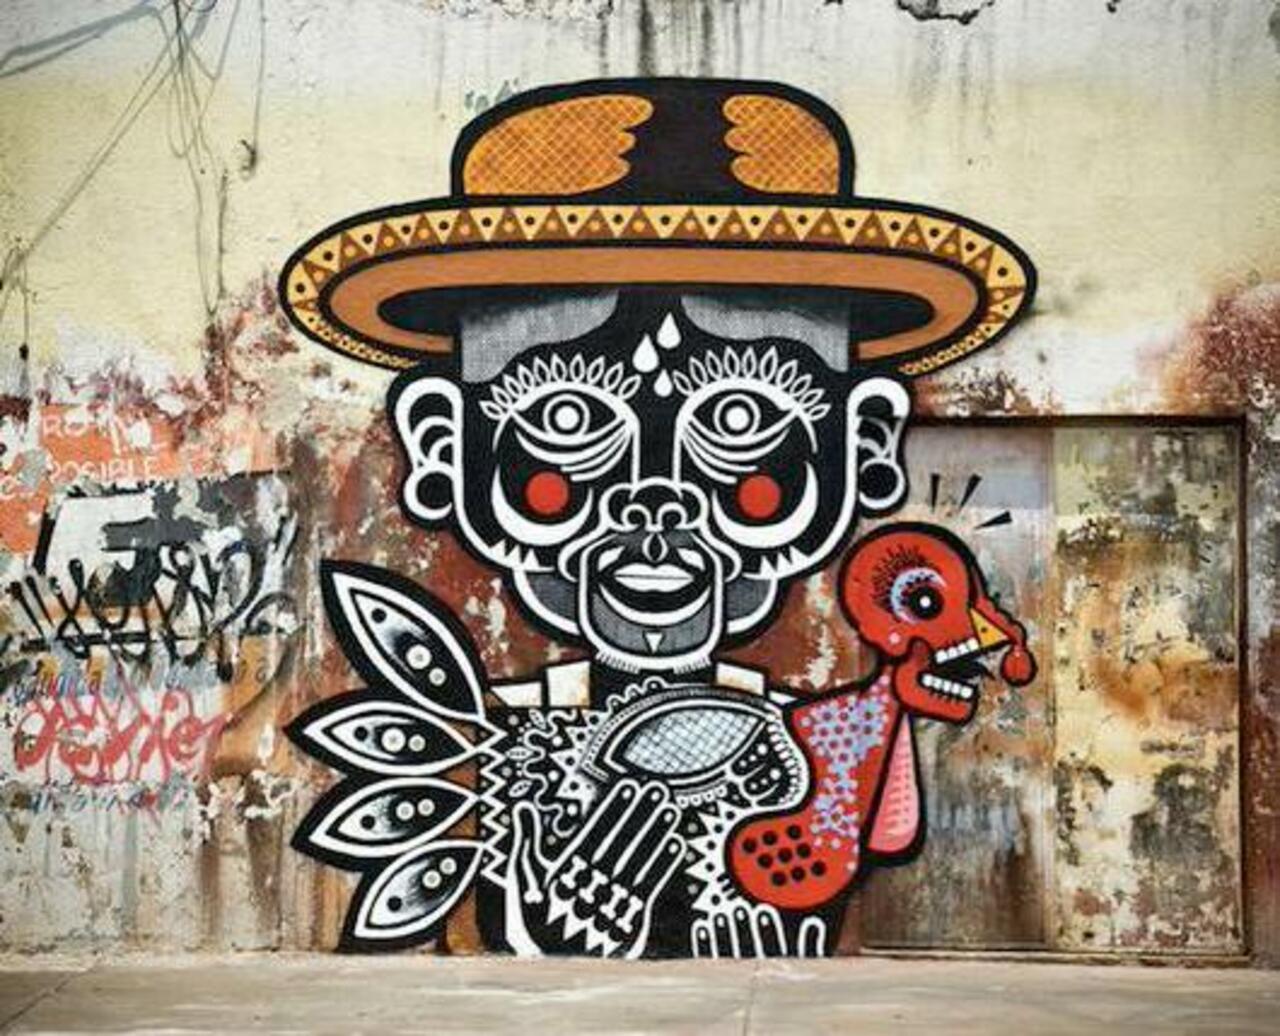 RT @AlmostT_Blog: Street Art by Neuzz, Mexico
via Inspiring Artists (@Inspired_Star)
http://www.almost-there.co.uk/#!unknown-pleasures-september-2015/csmx
#art #streetart #graffiti http://t.co/9zLW2VZmCv